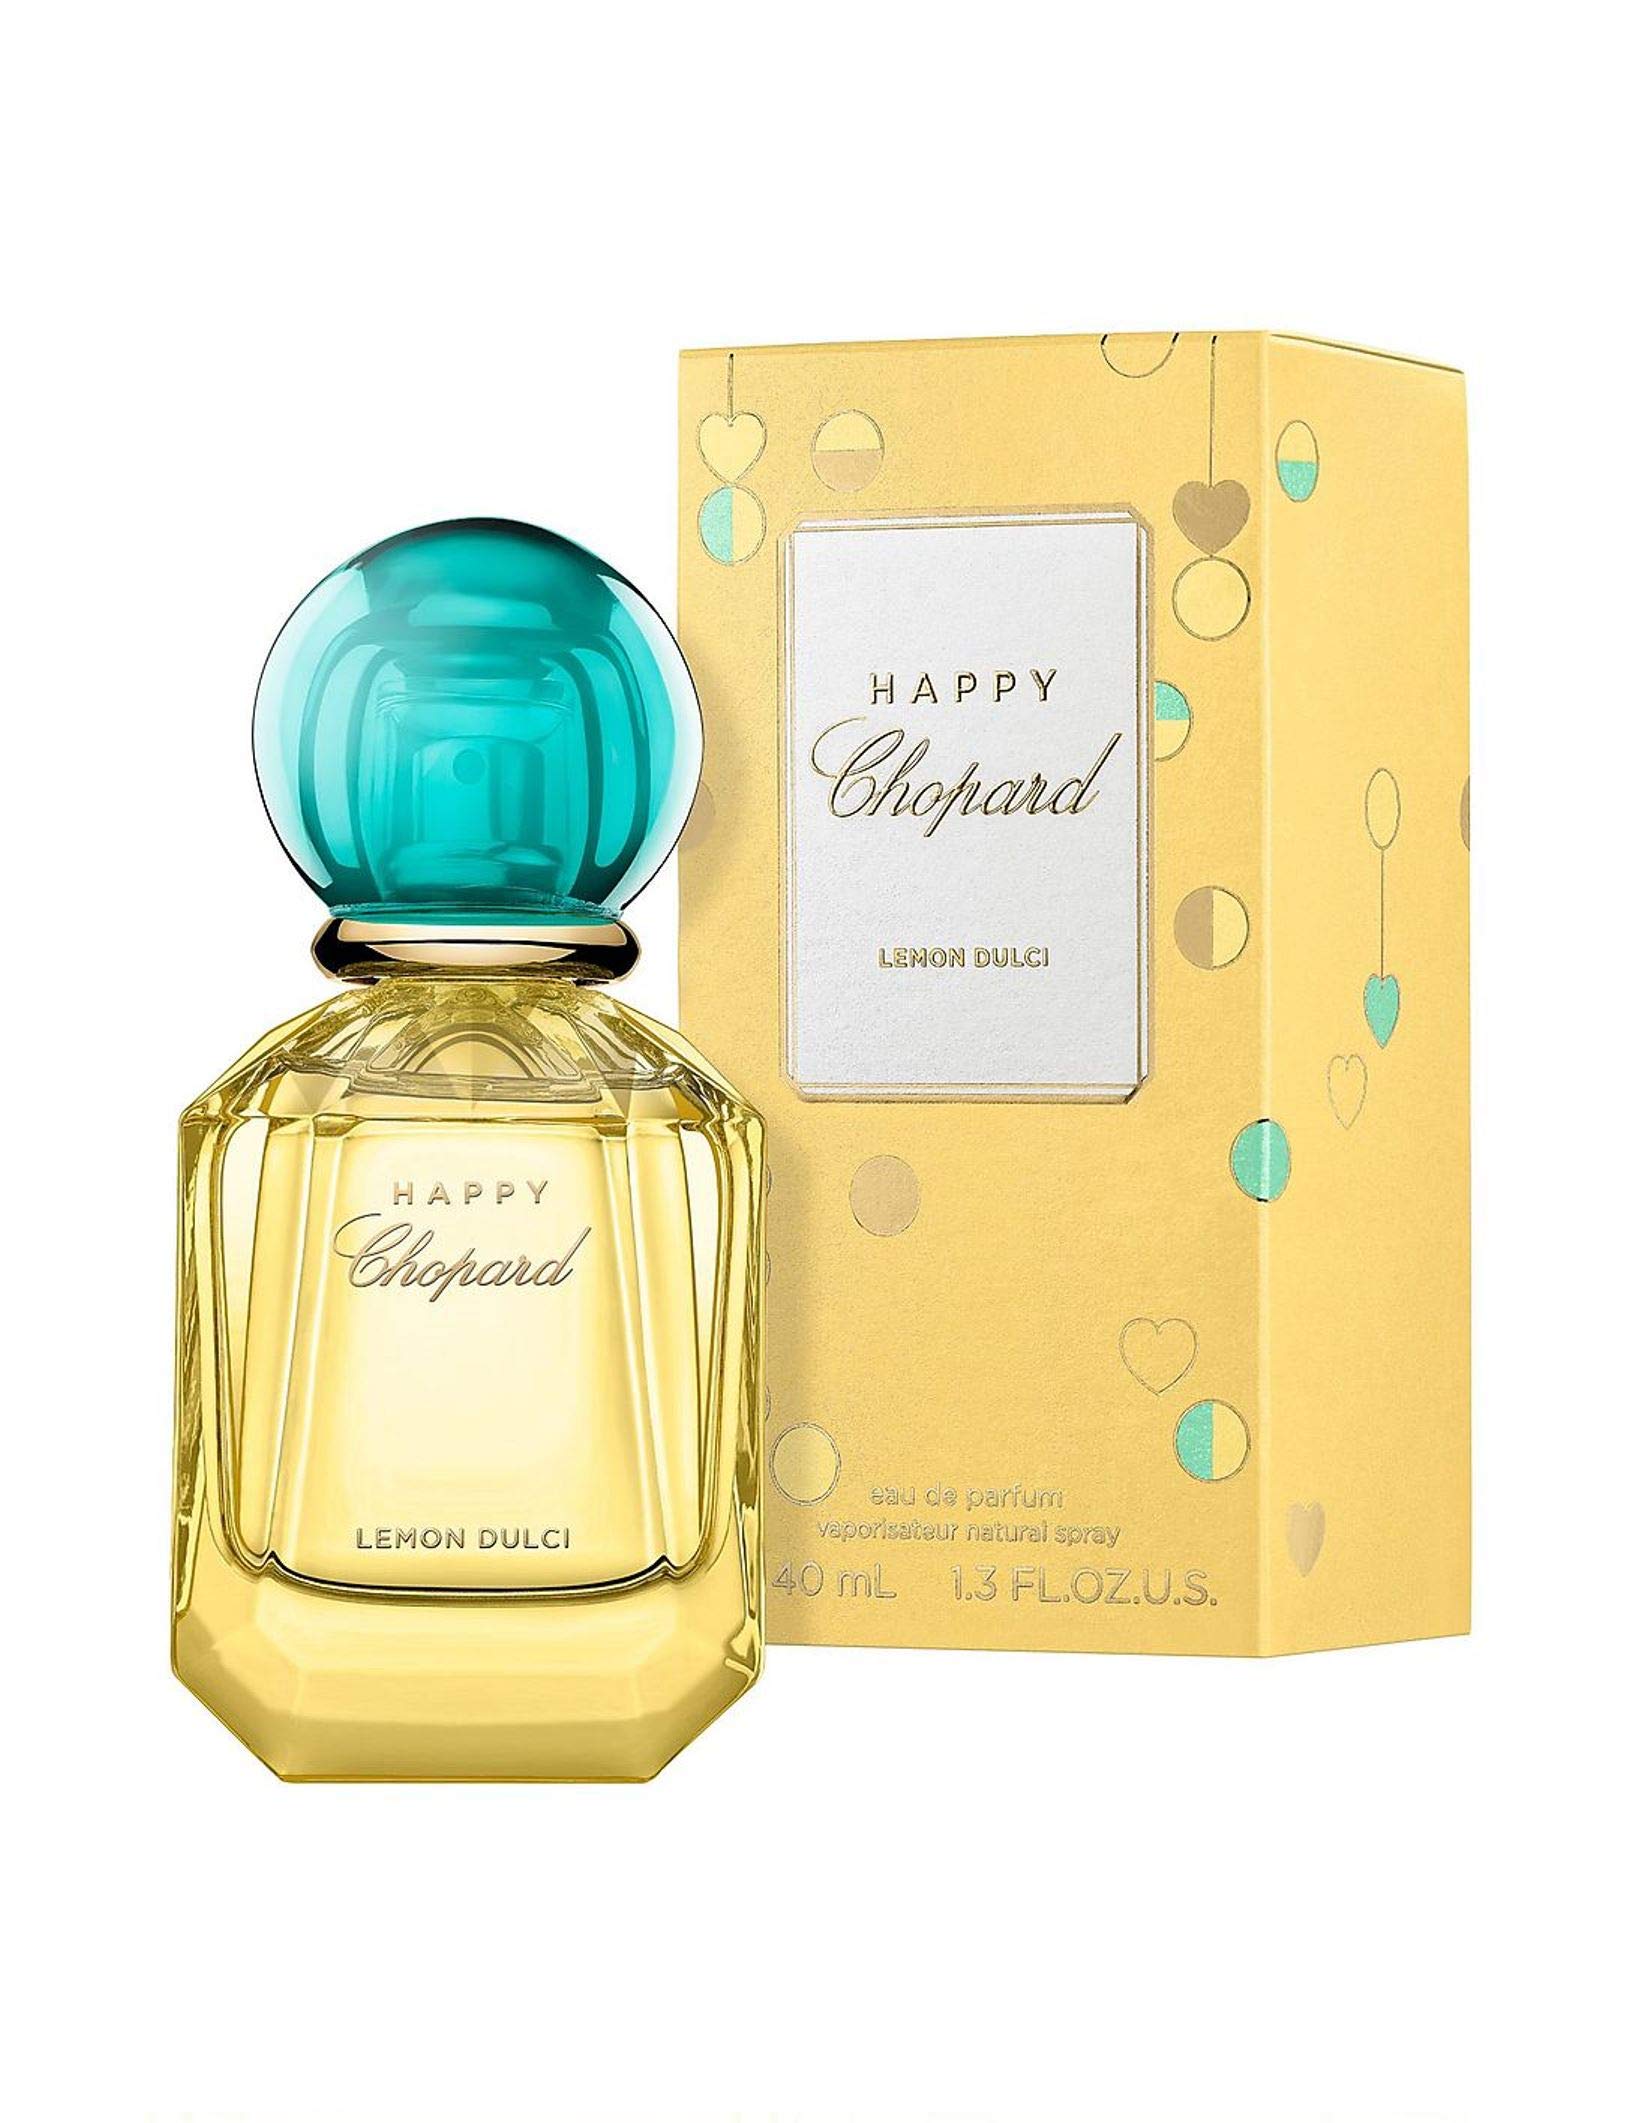 Chopard Lemon Dulci EdP, Linie: Happy Chopard, Eau de Parfum für Damen, Inhalt: 40ml